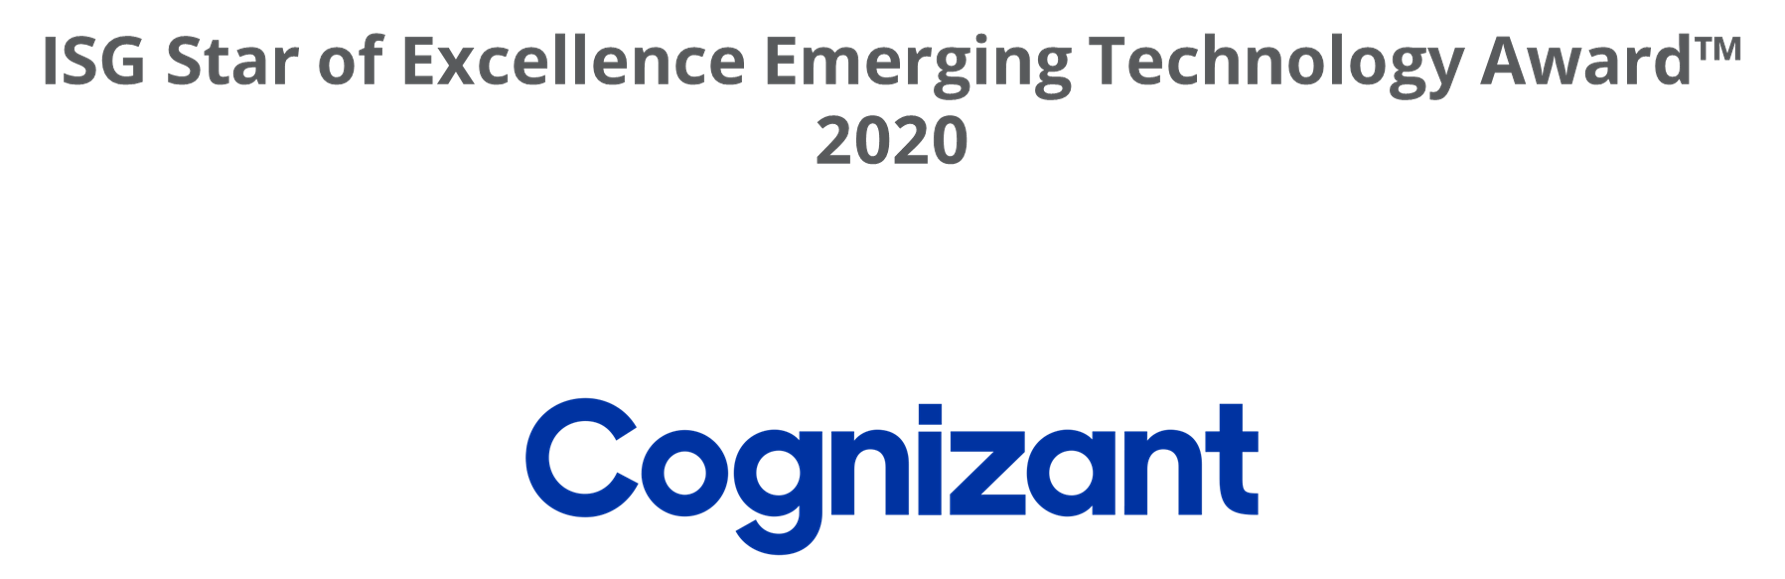 Emerging Technology Award-2020